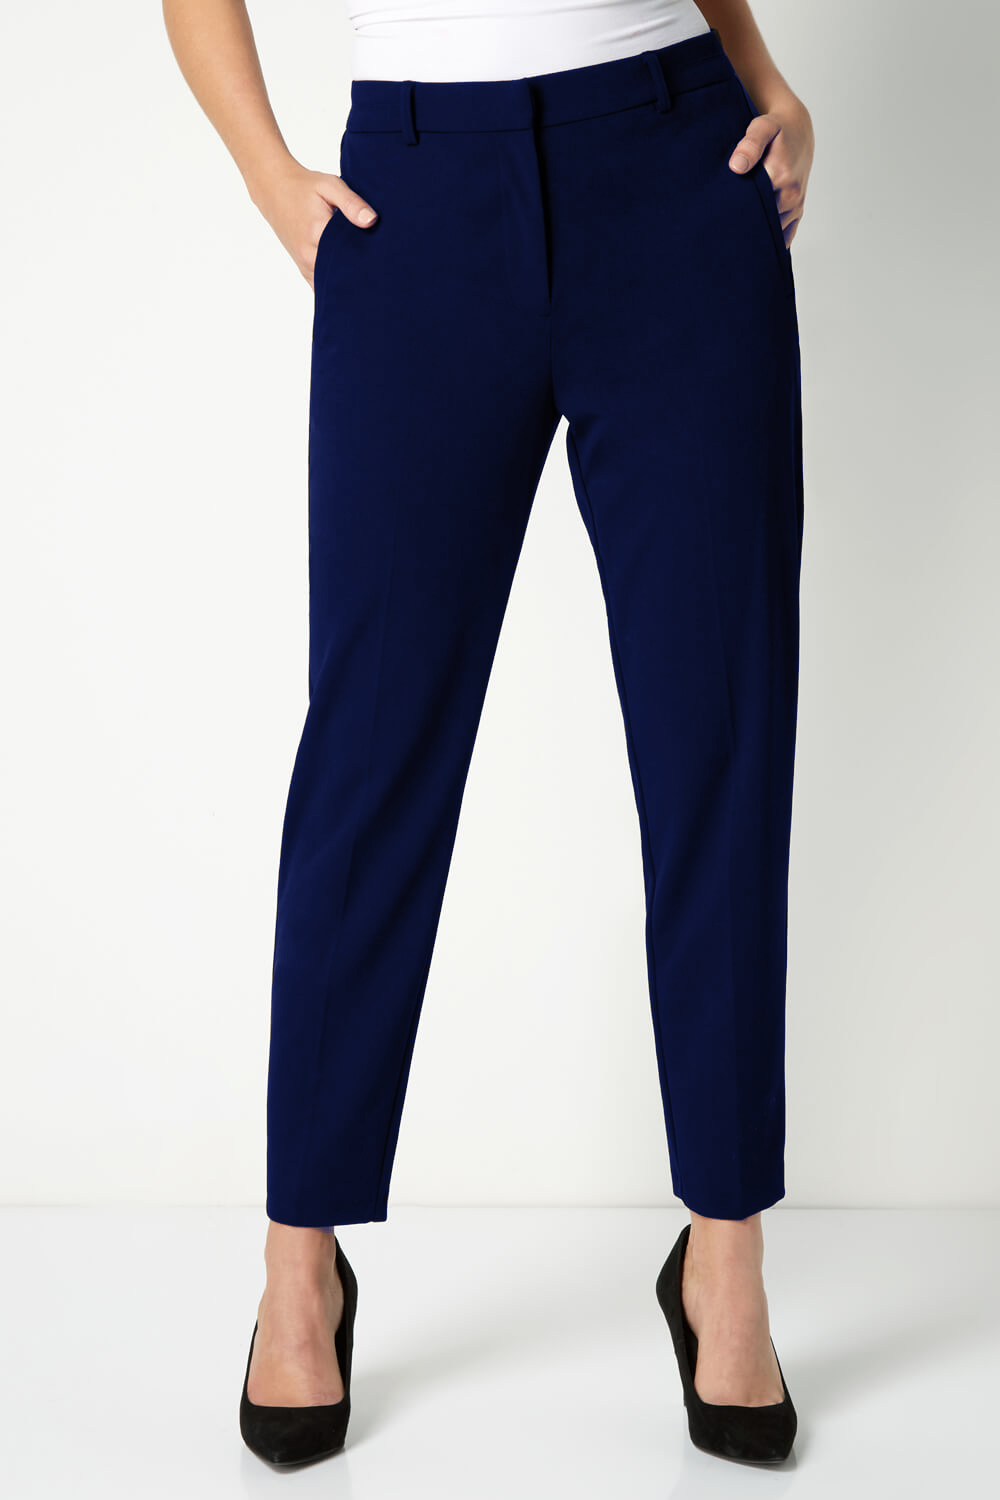 Navy Blue Trousers Shop Online